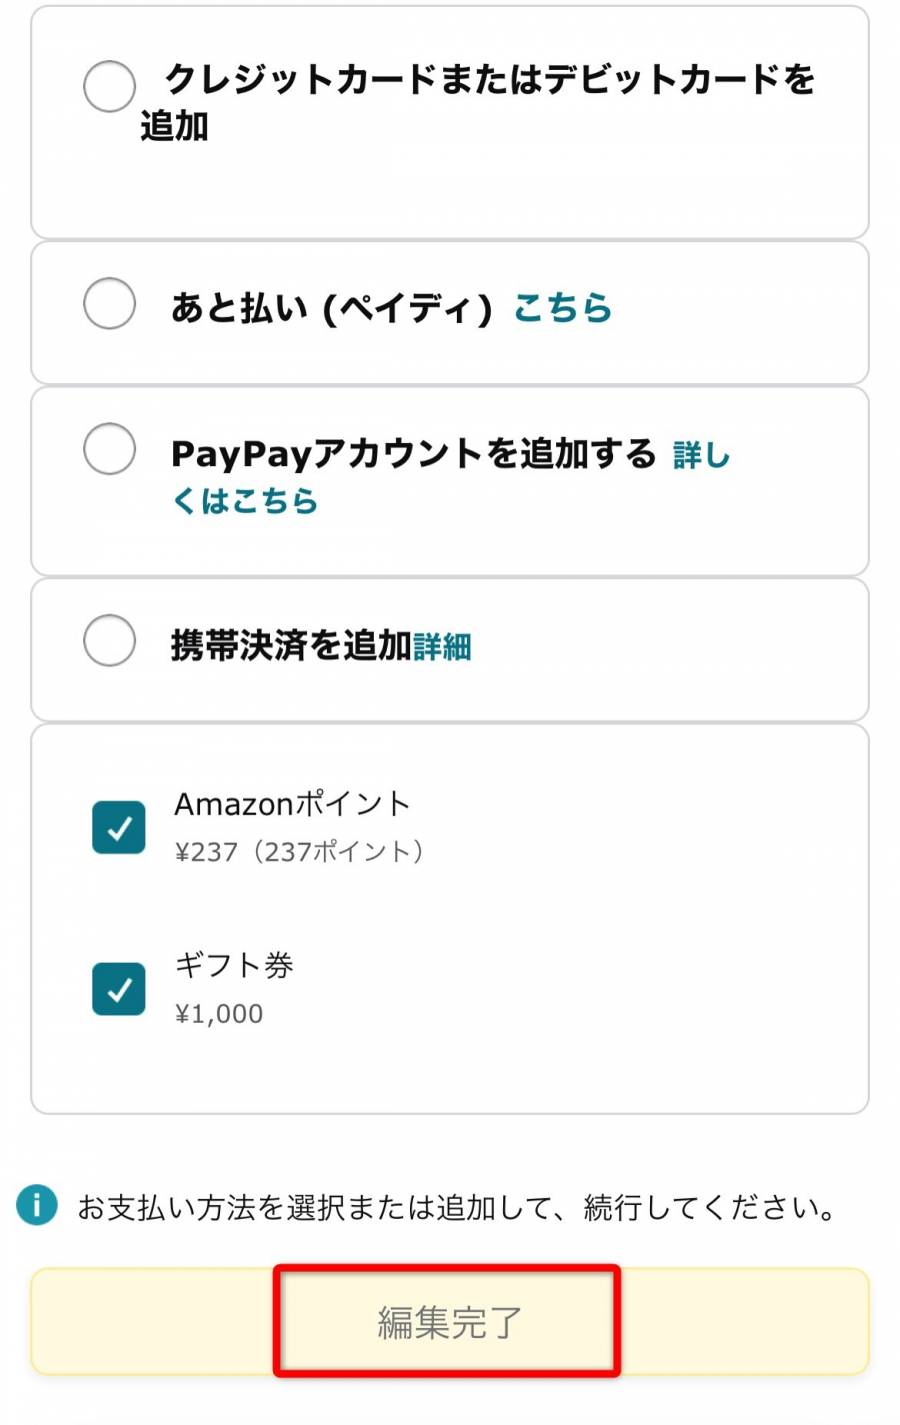 Kindleの支払い方法を選択画面